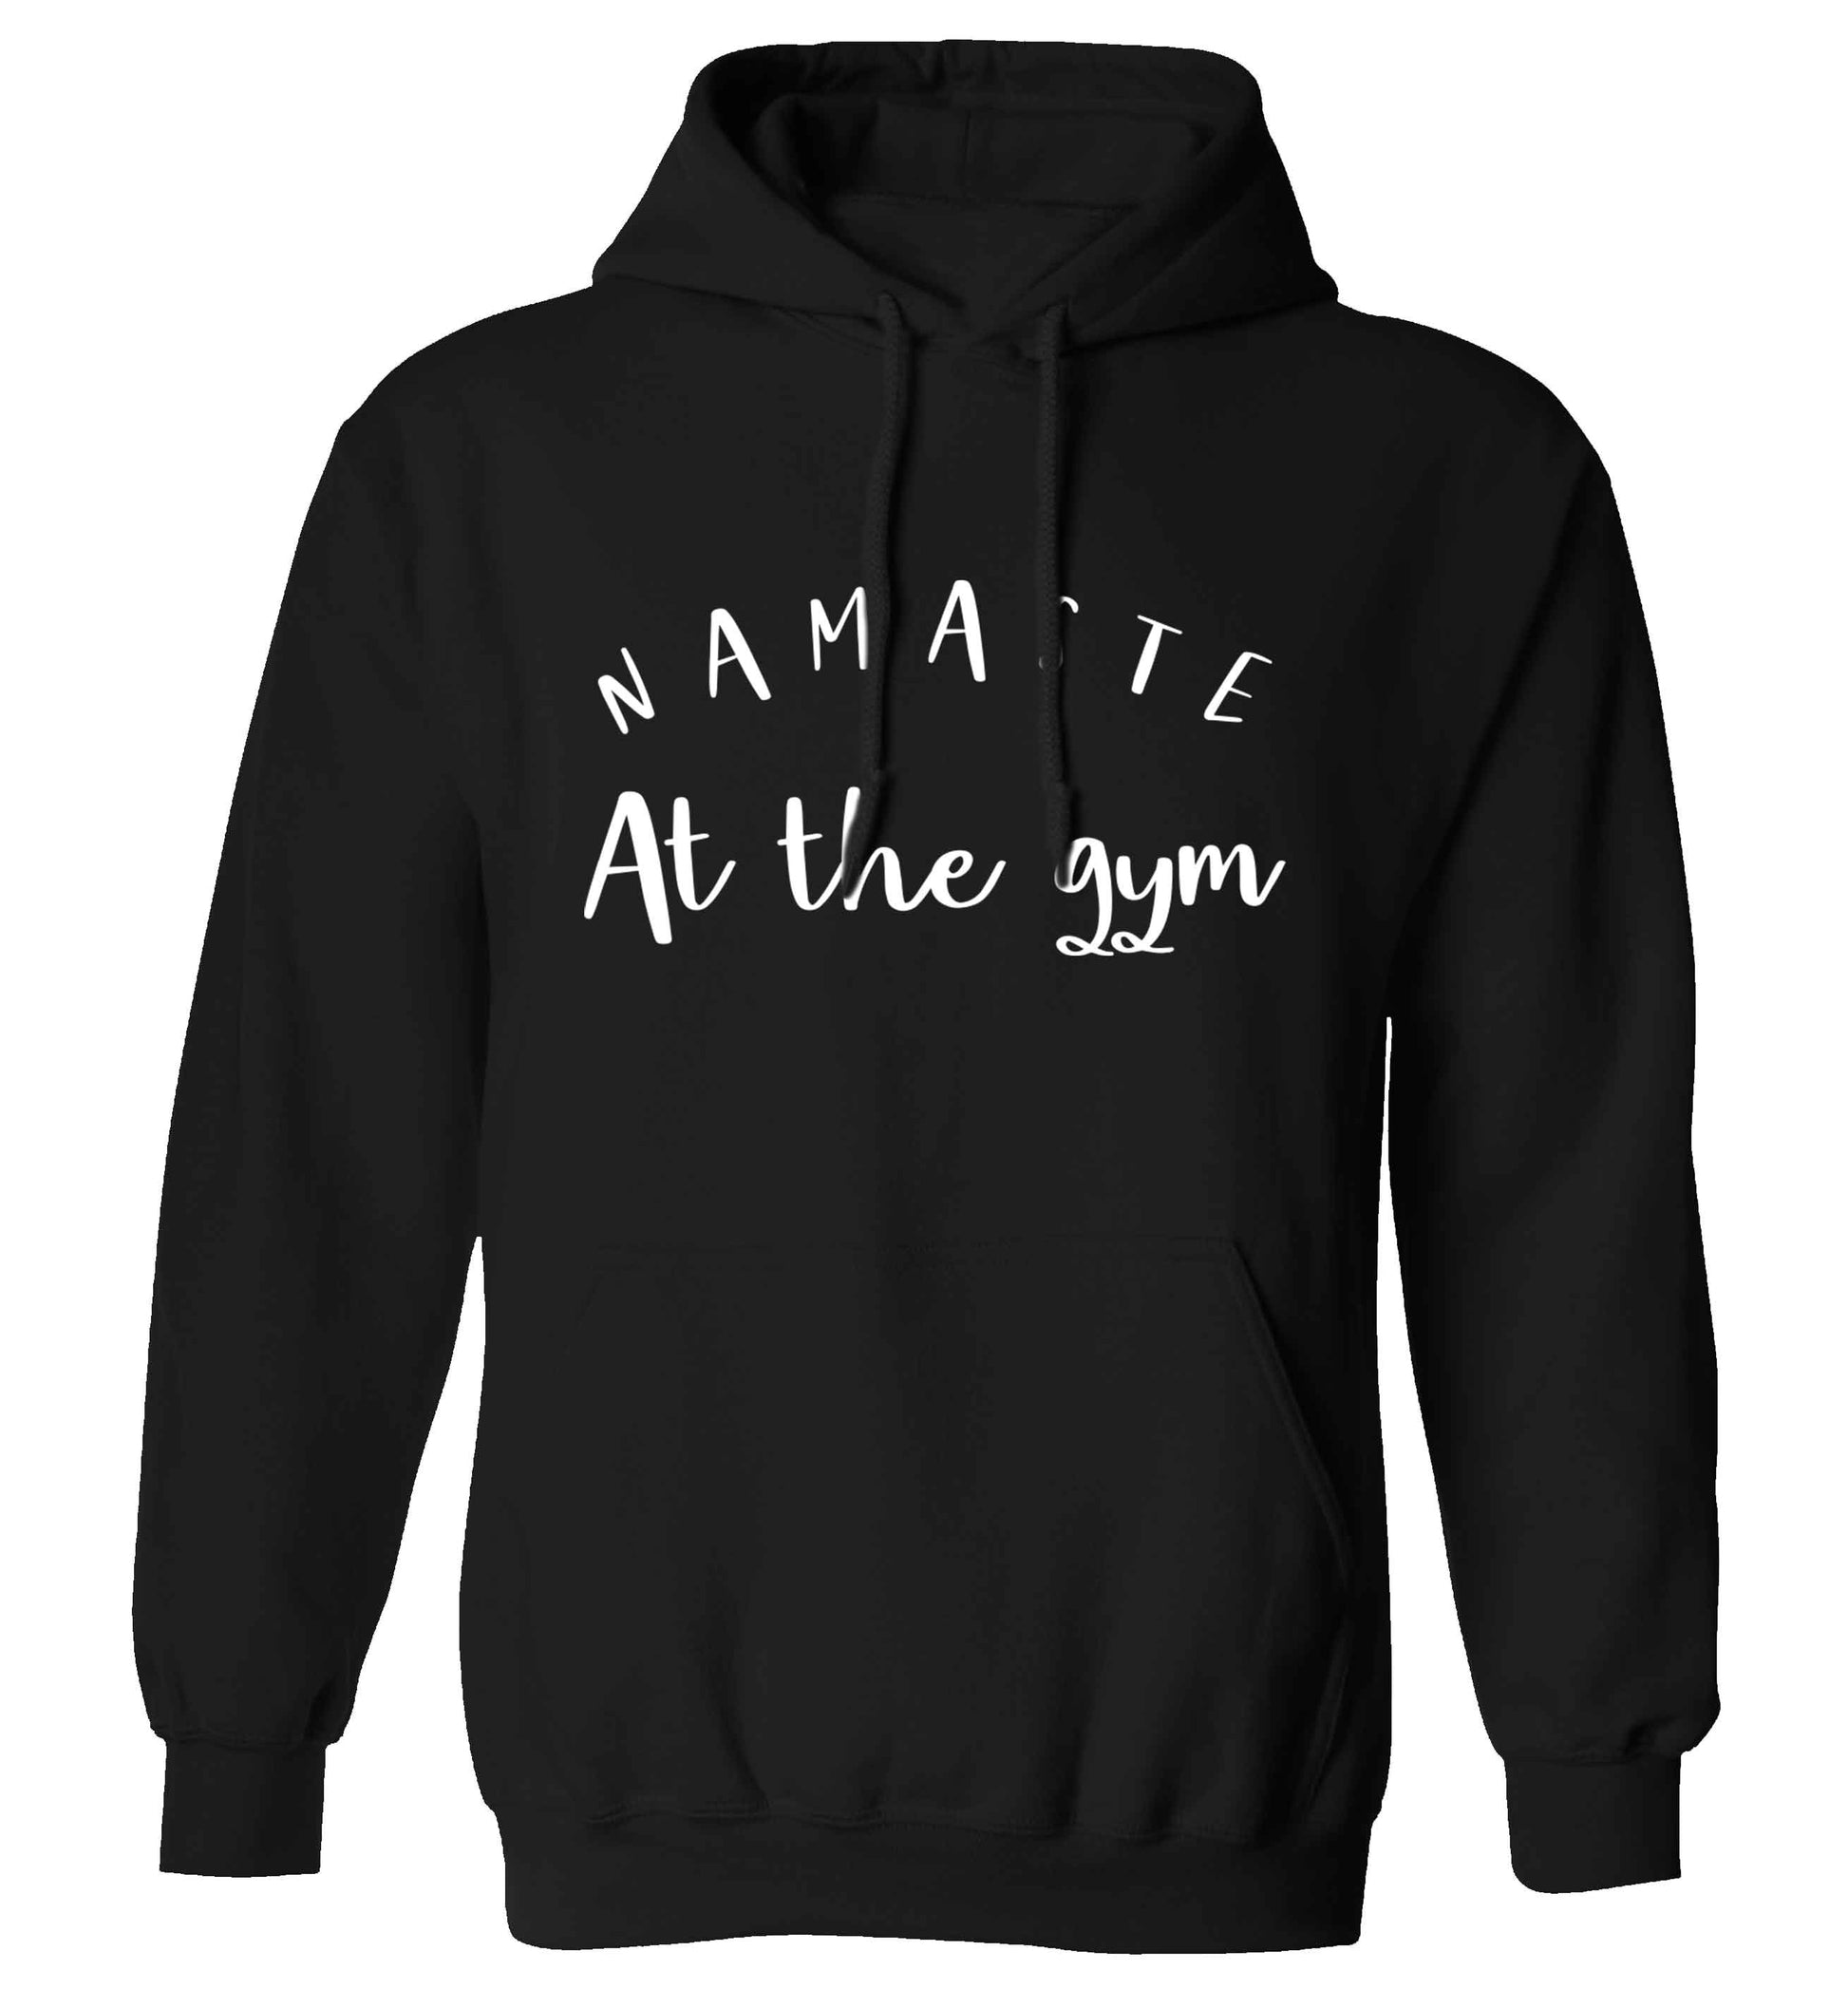 Namaste at the gym adults unisex black hoodie 2XL